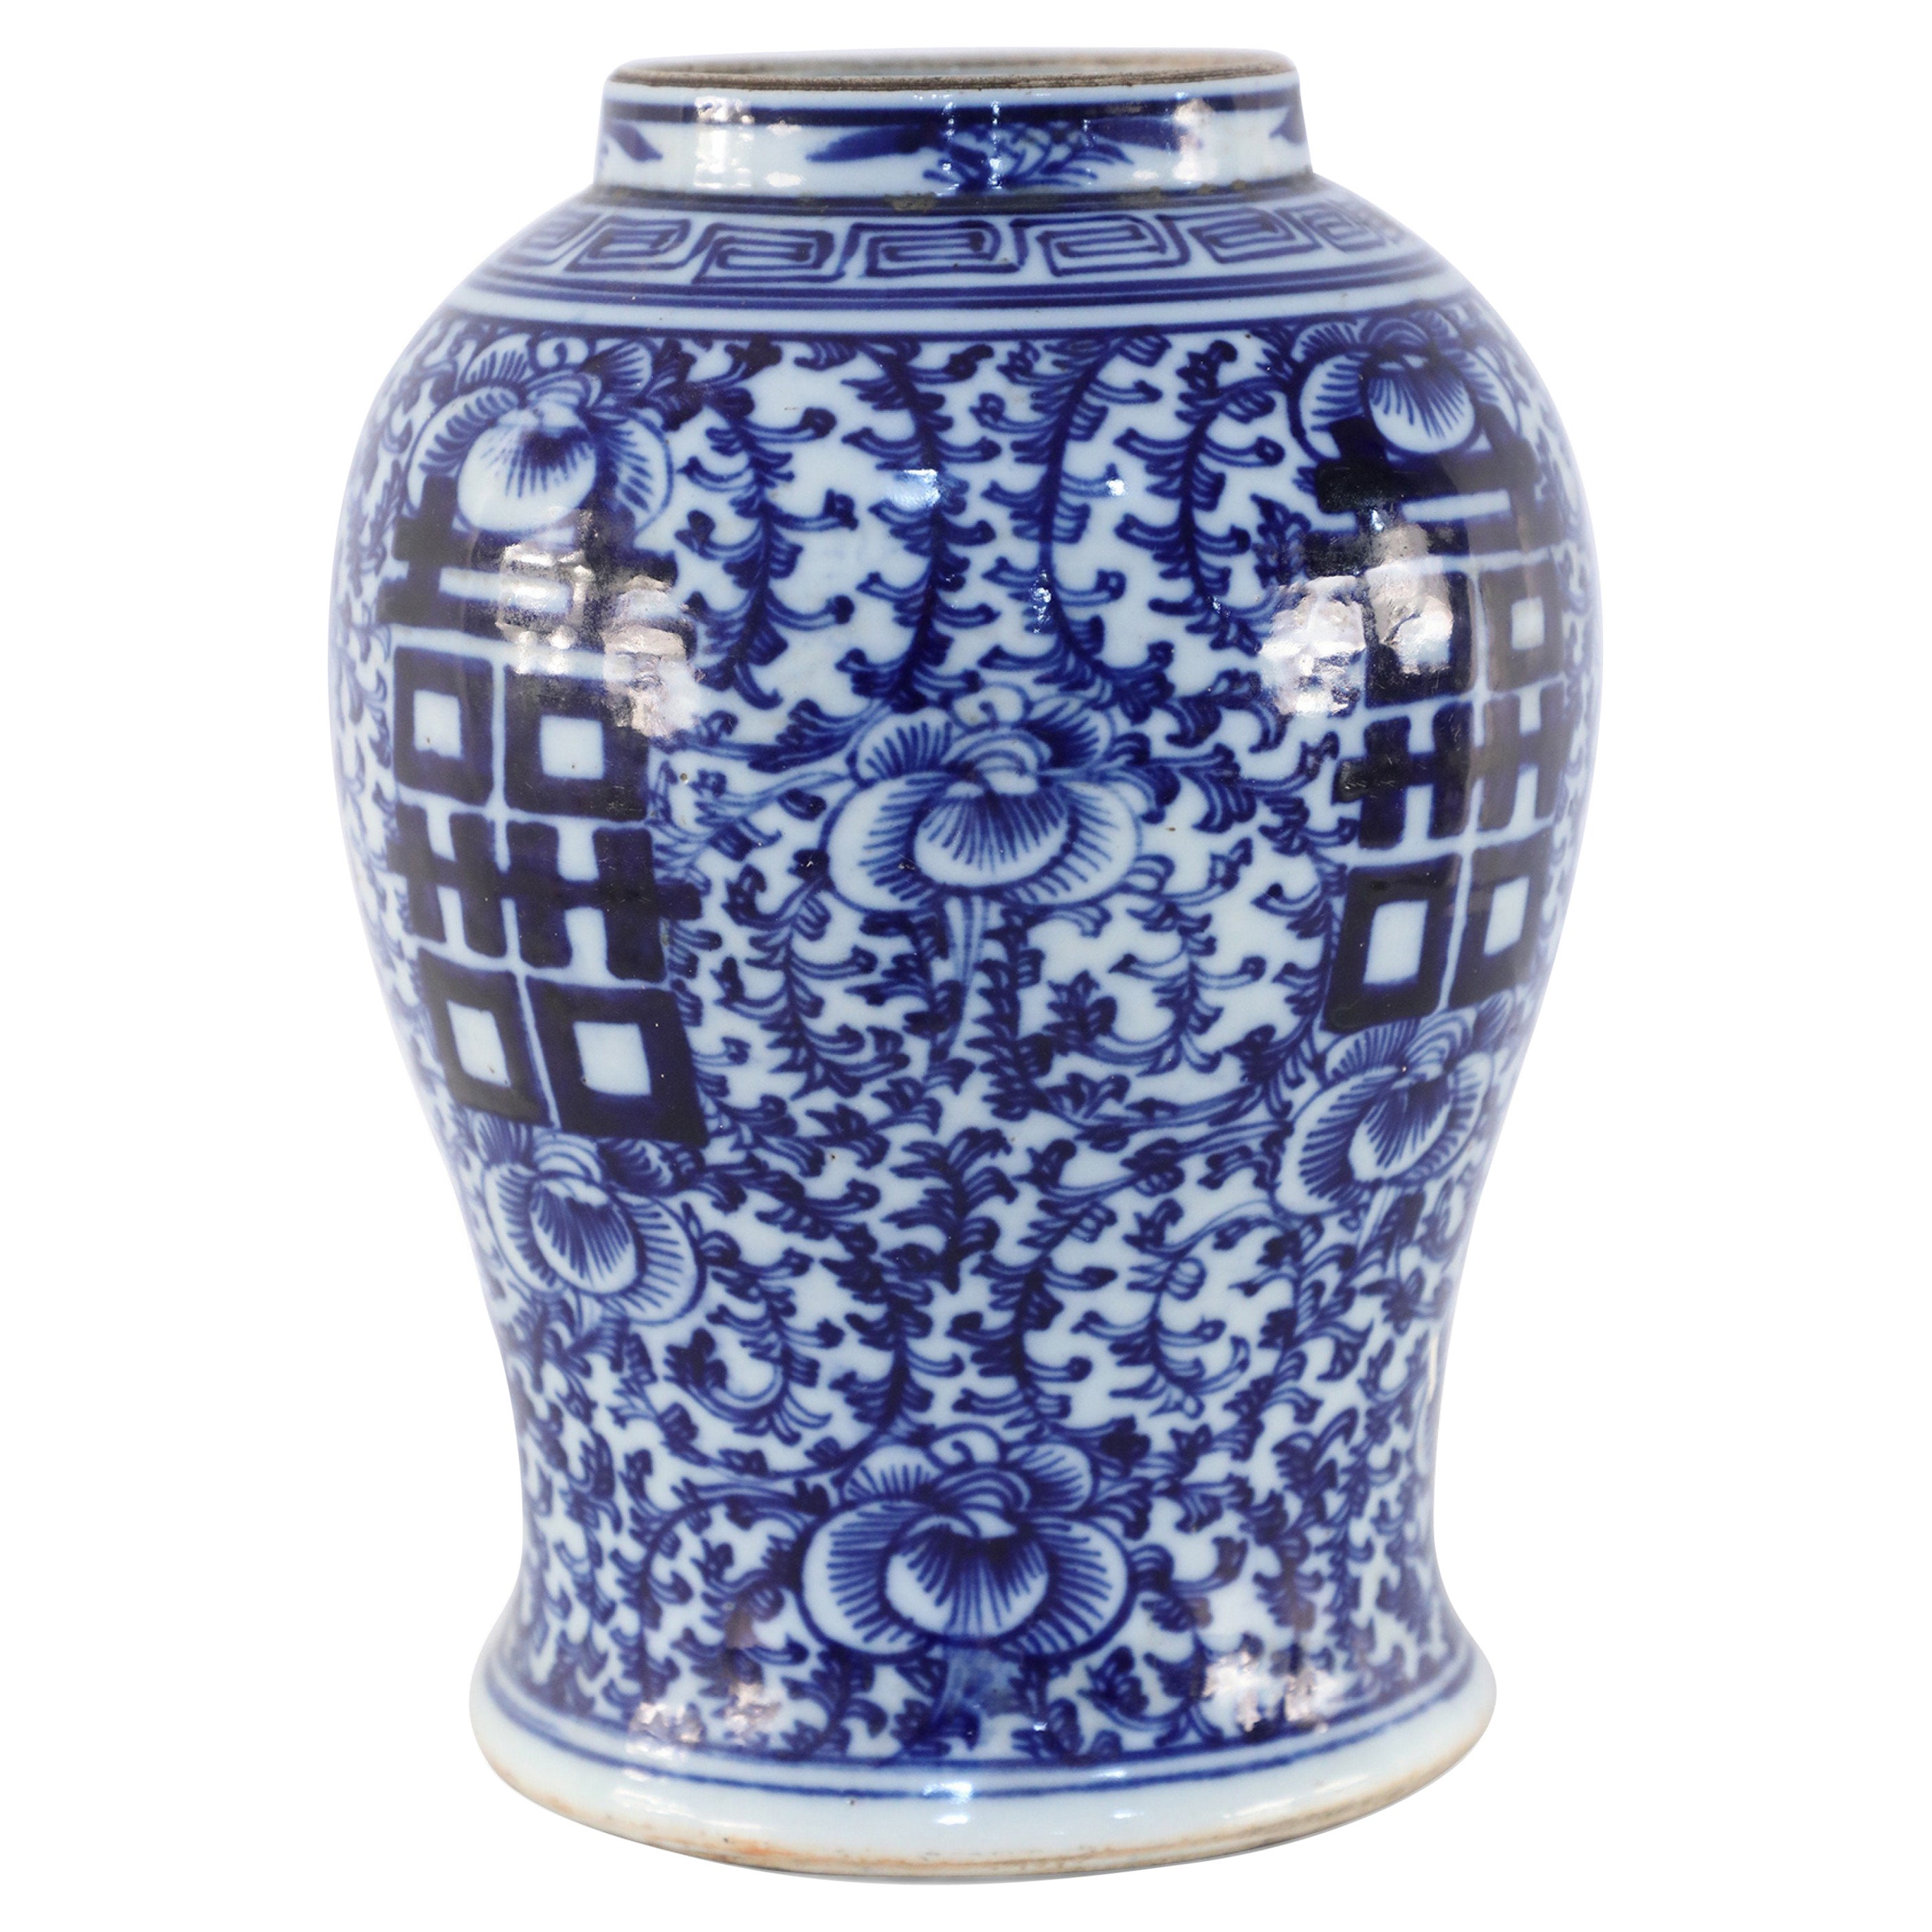 Chinese Off-White and Navy Vine Motif Porcelain Urn Vase For Sale